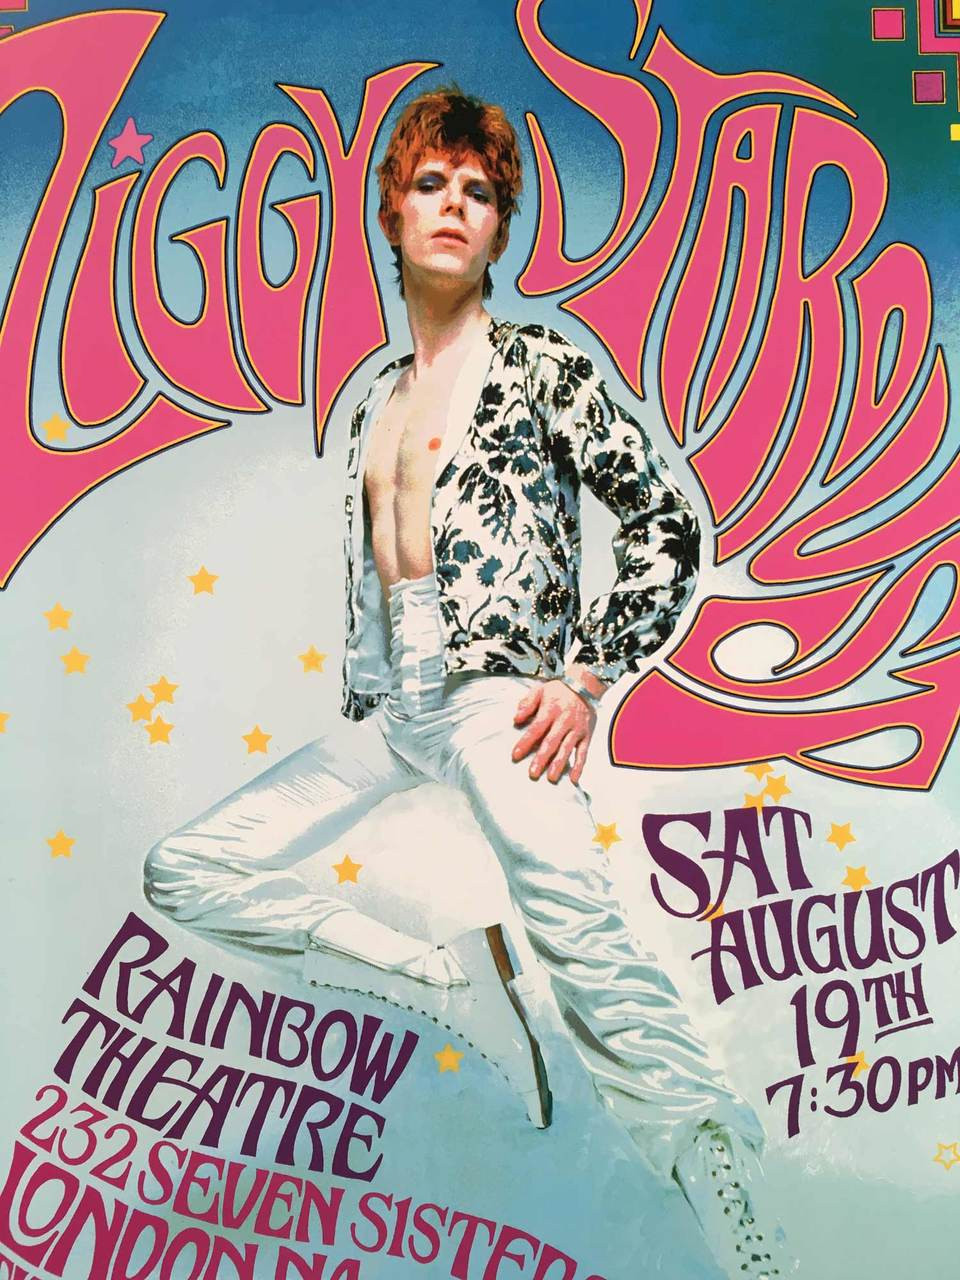 David Bowie Ziggy Stardust Poster Tribute To Historic 1972 Rainbow Theater Show Optikrock 8762